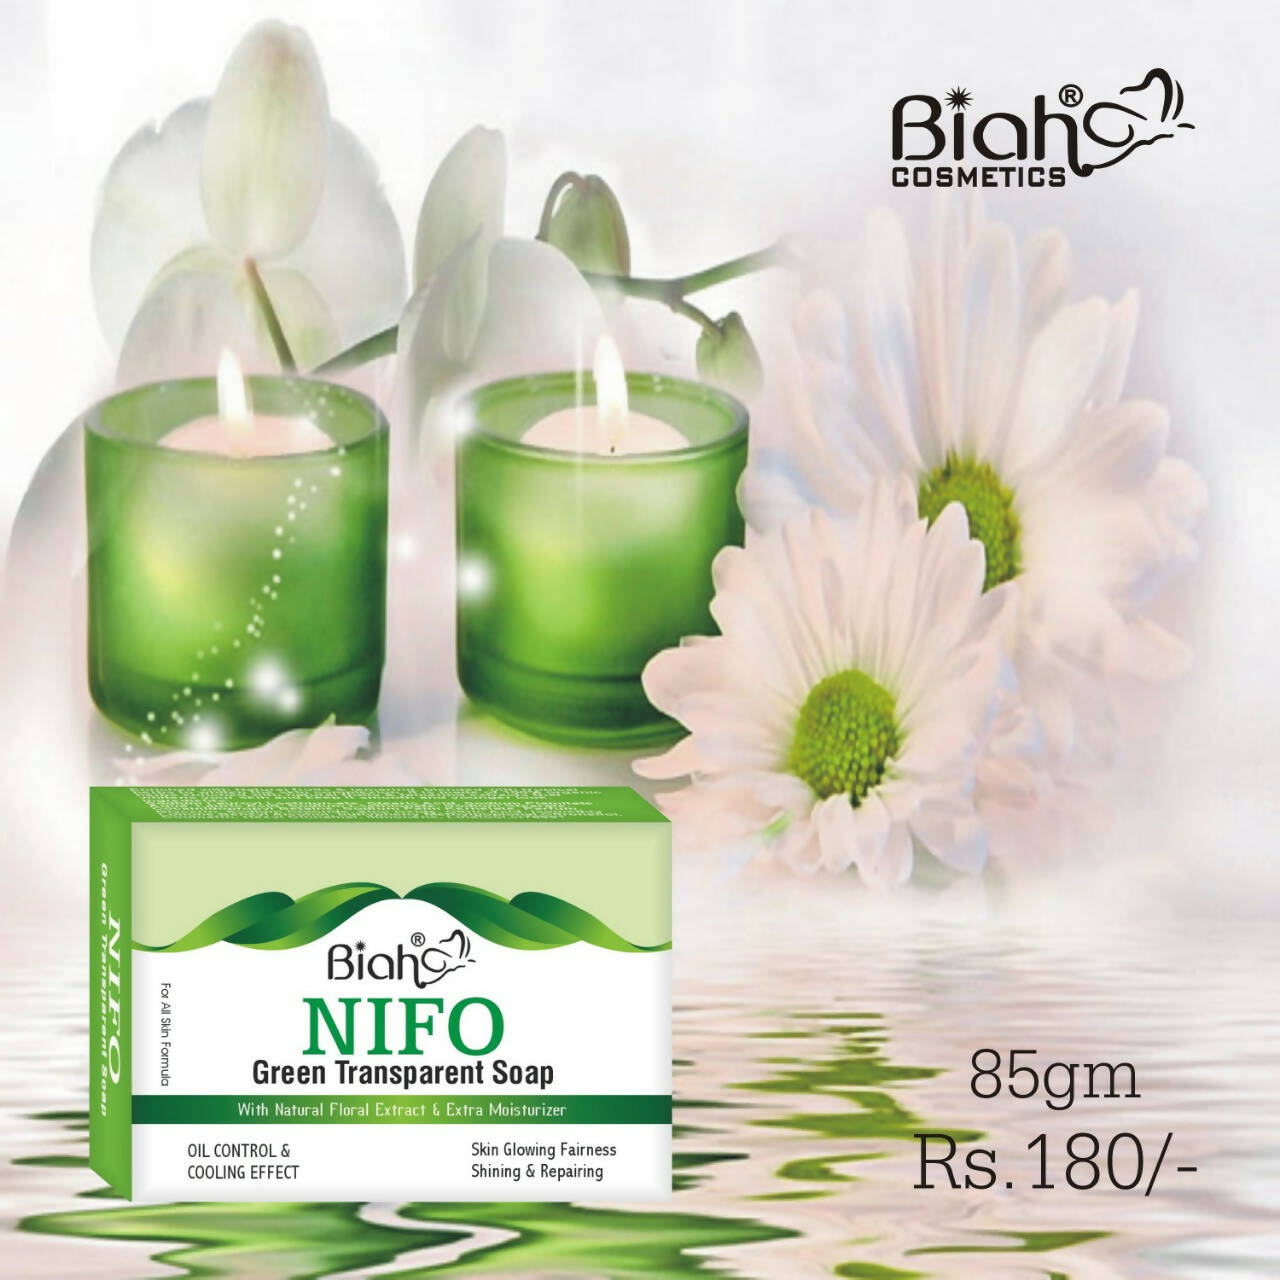 Biah Cosmetics - 3 packs of Nifo Green Tranparent Soap